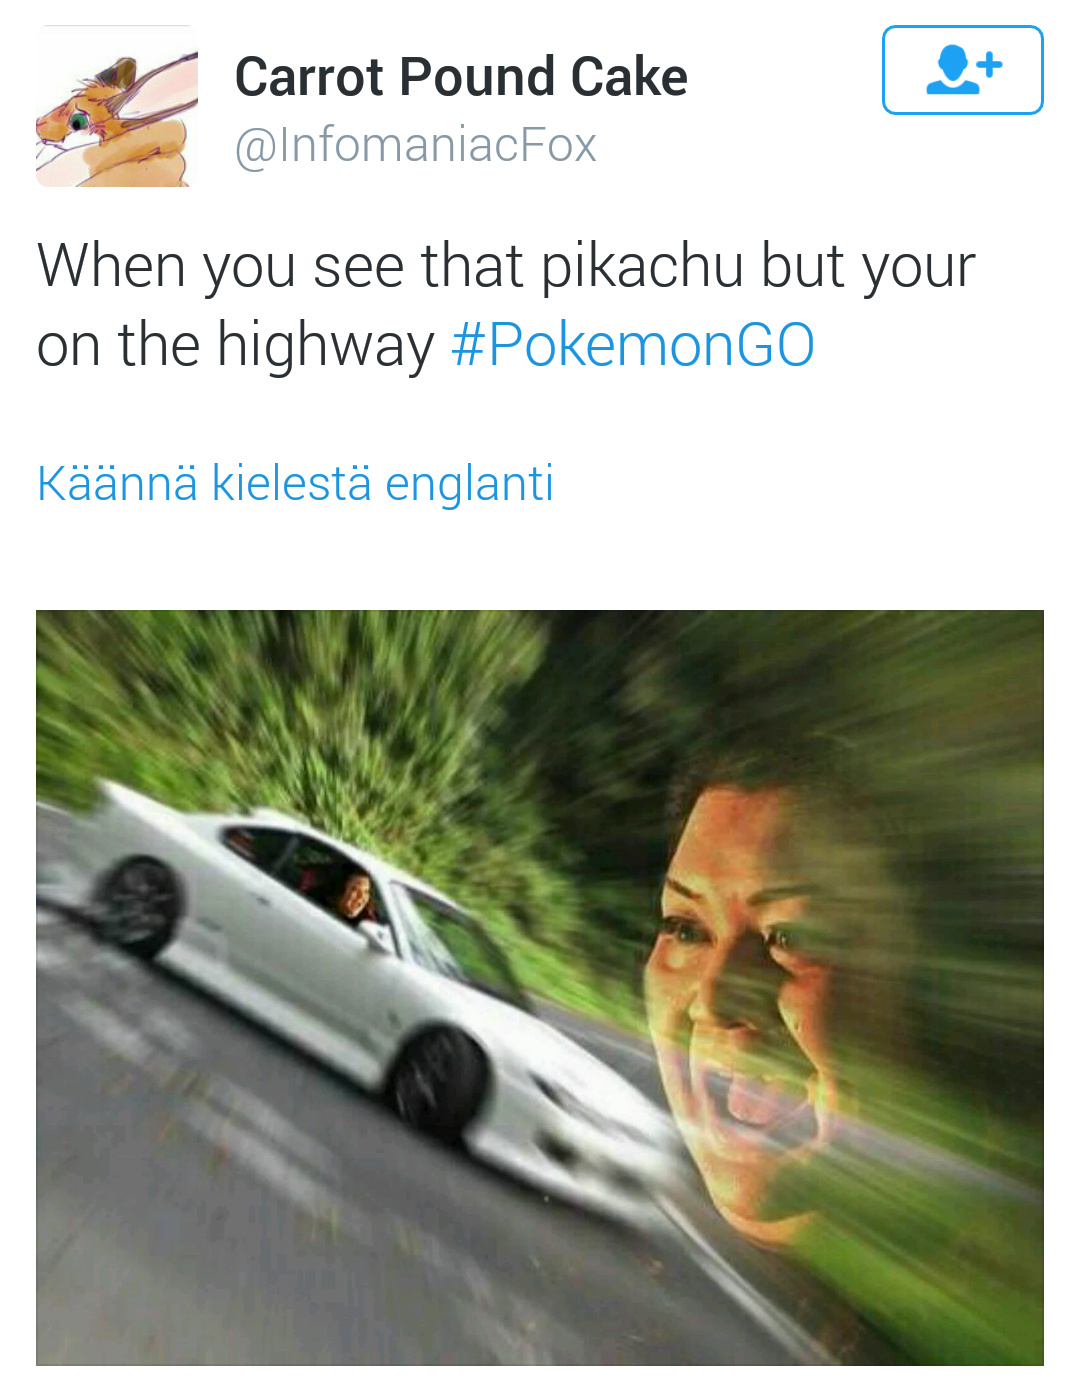 Rip pokemon go servers - meme